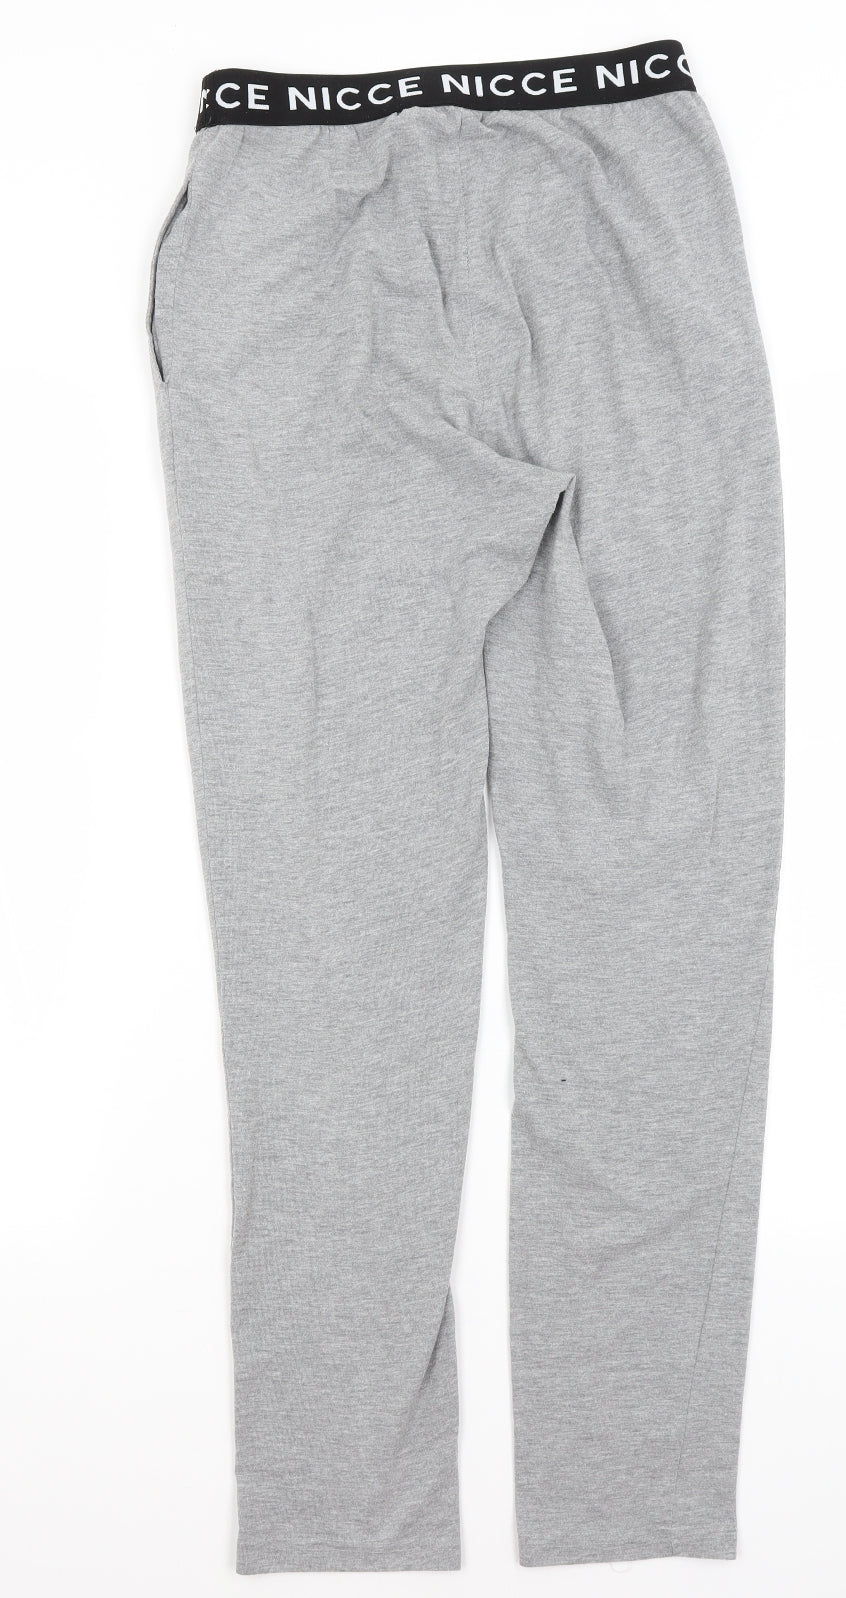 NICCE Womens Grey Solid  Capri Lounge Pants Size S